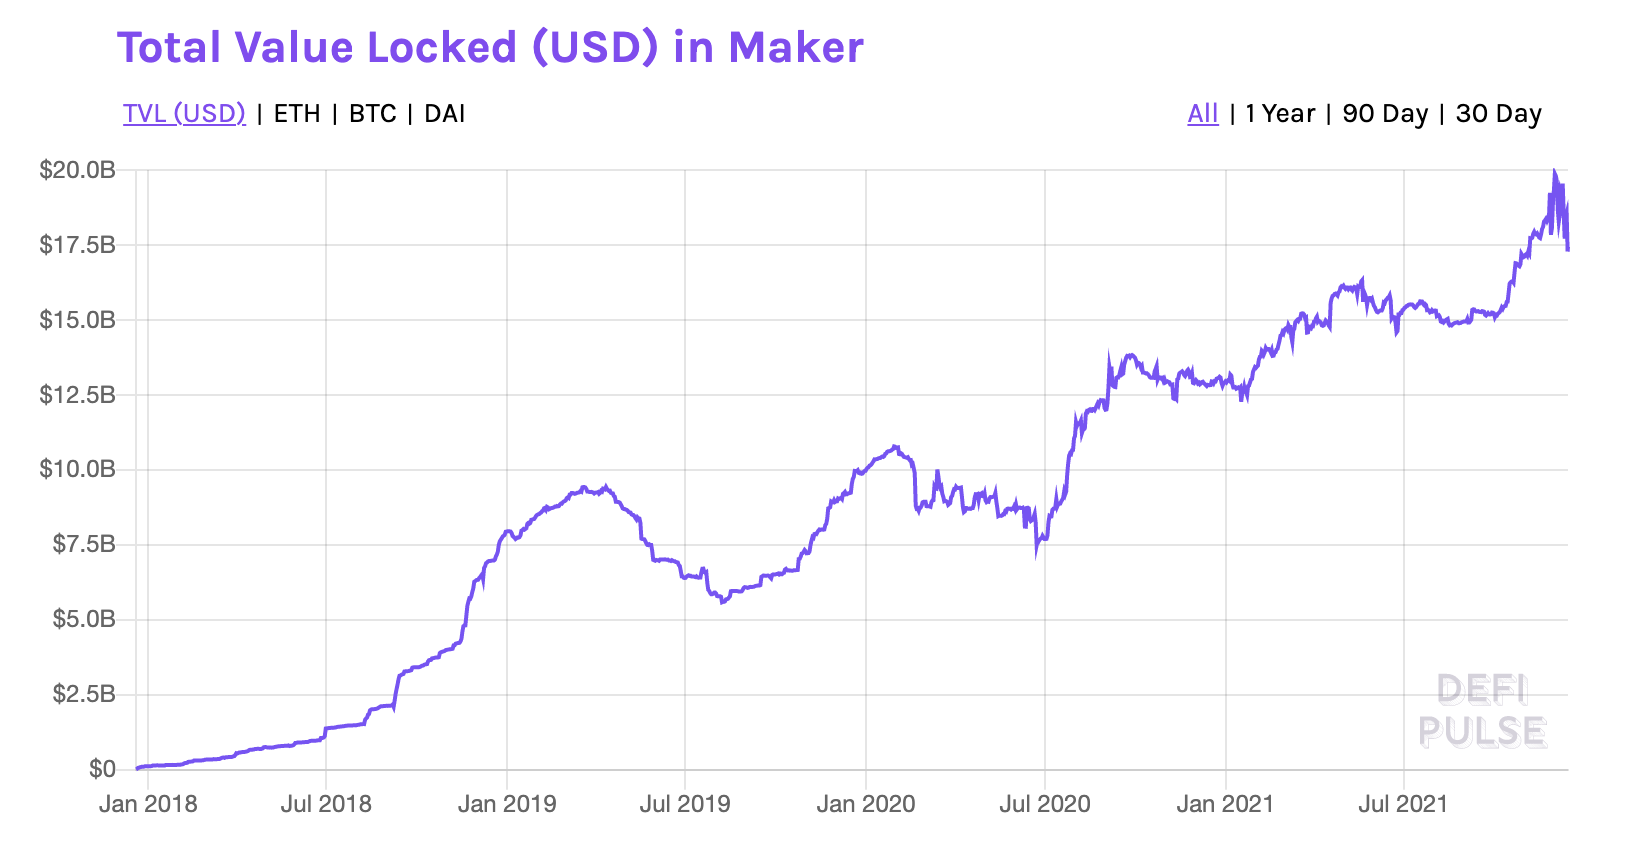 Maker’s TVL has grown steadily, approaching $20 billion in November 2021.